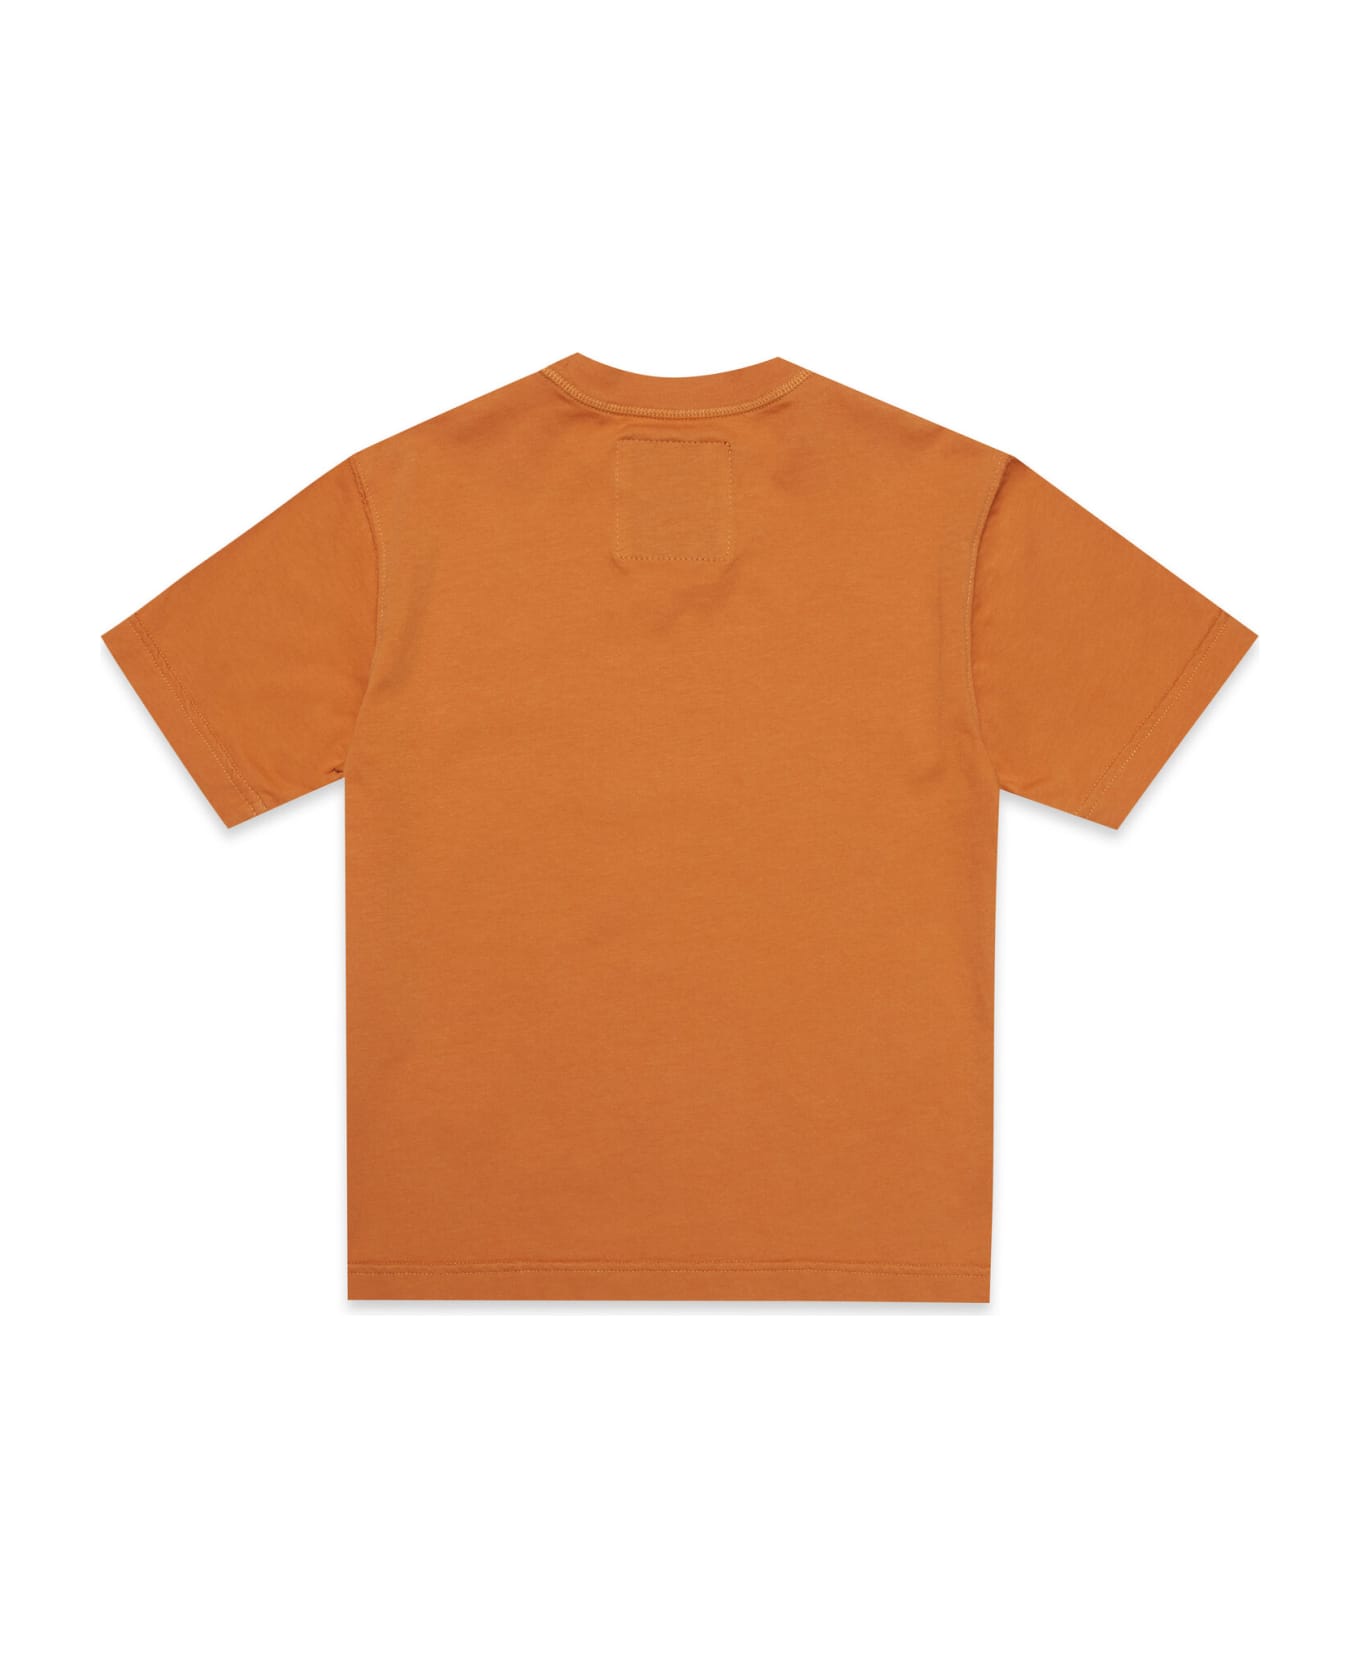 MYAR Myt24u T-shirt Myar Deadstock Orange Crewneck T-shirt With Digital Print Sloowly - Faded orange